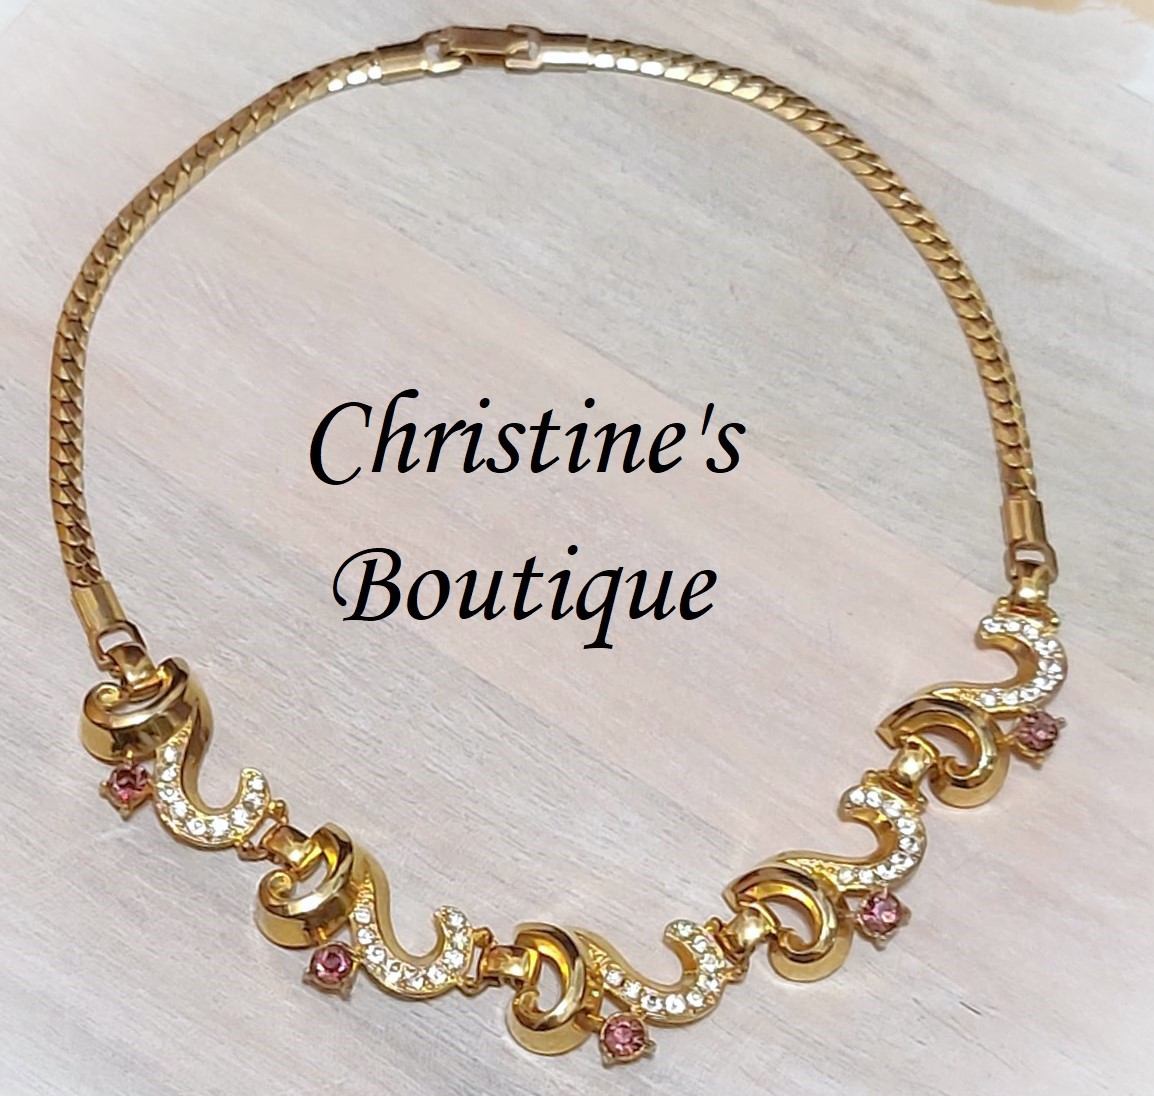 Rhinestone vintage chocker necklace signed Lisner